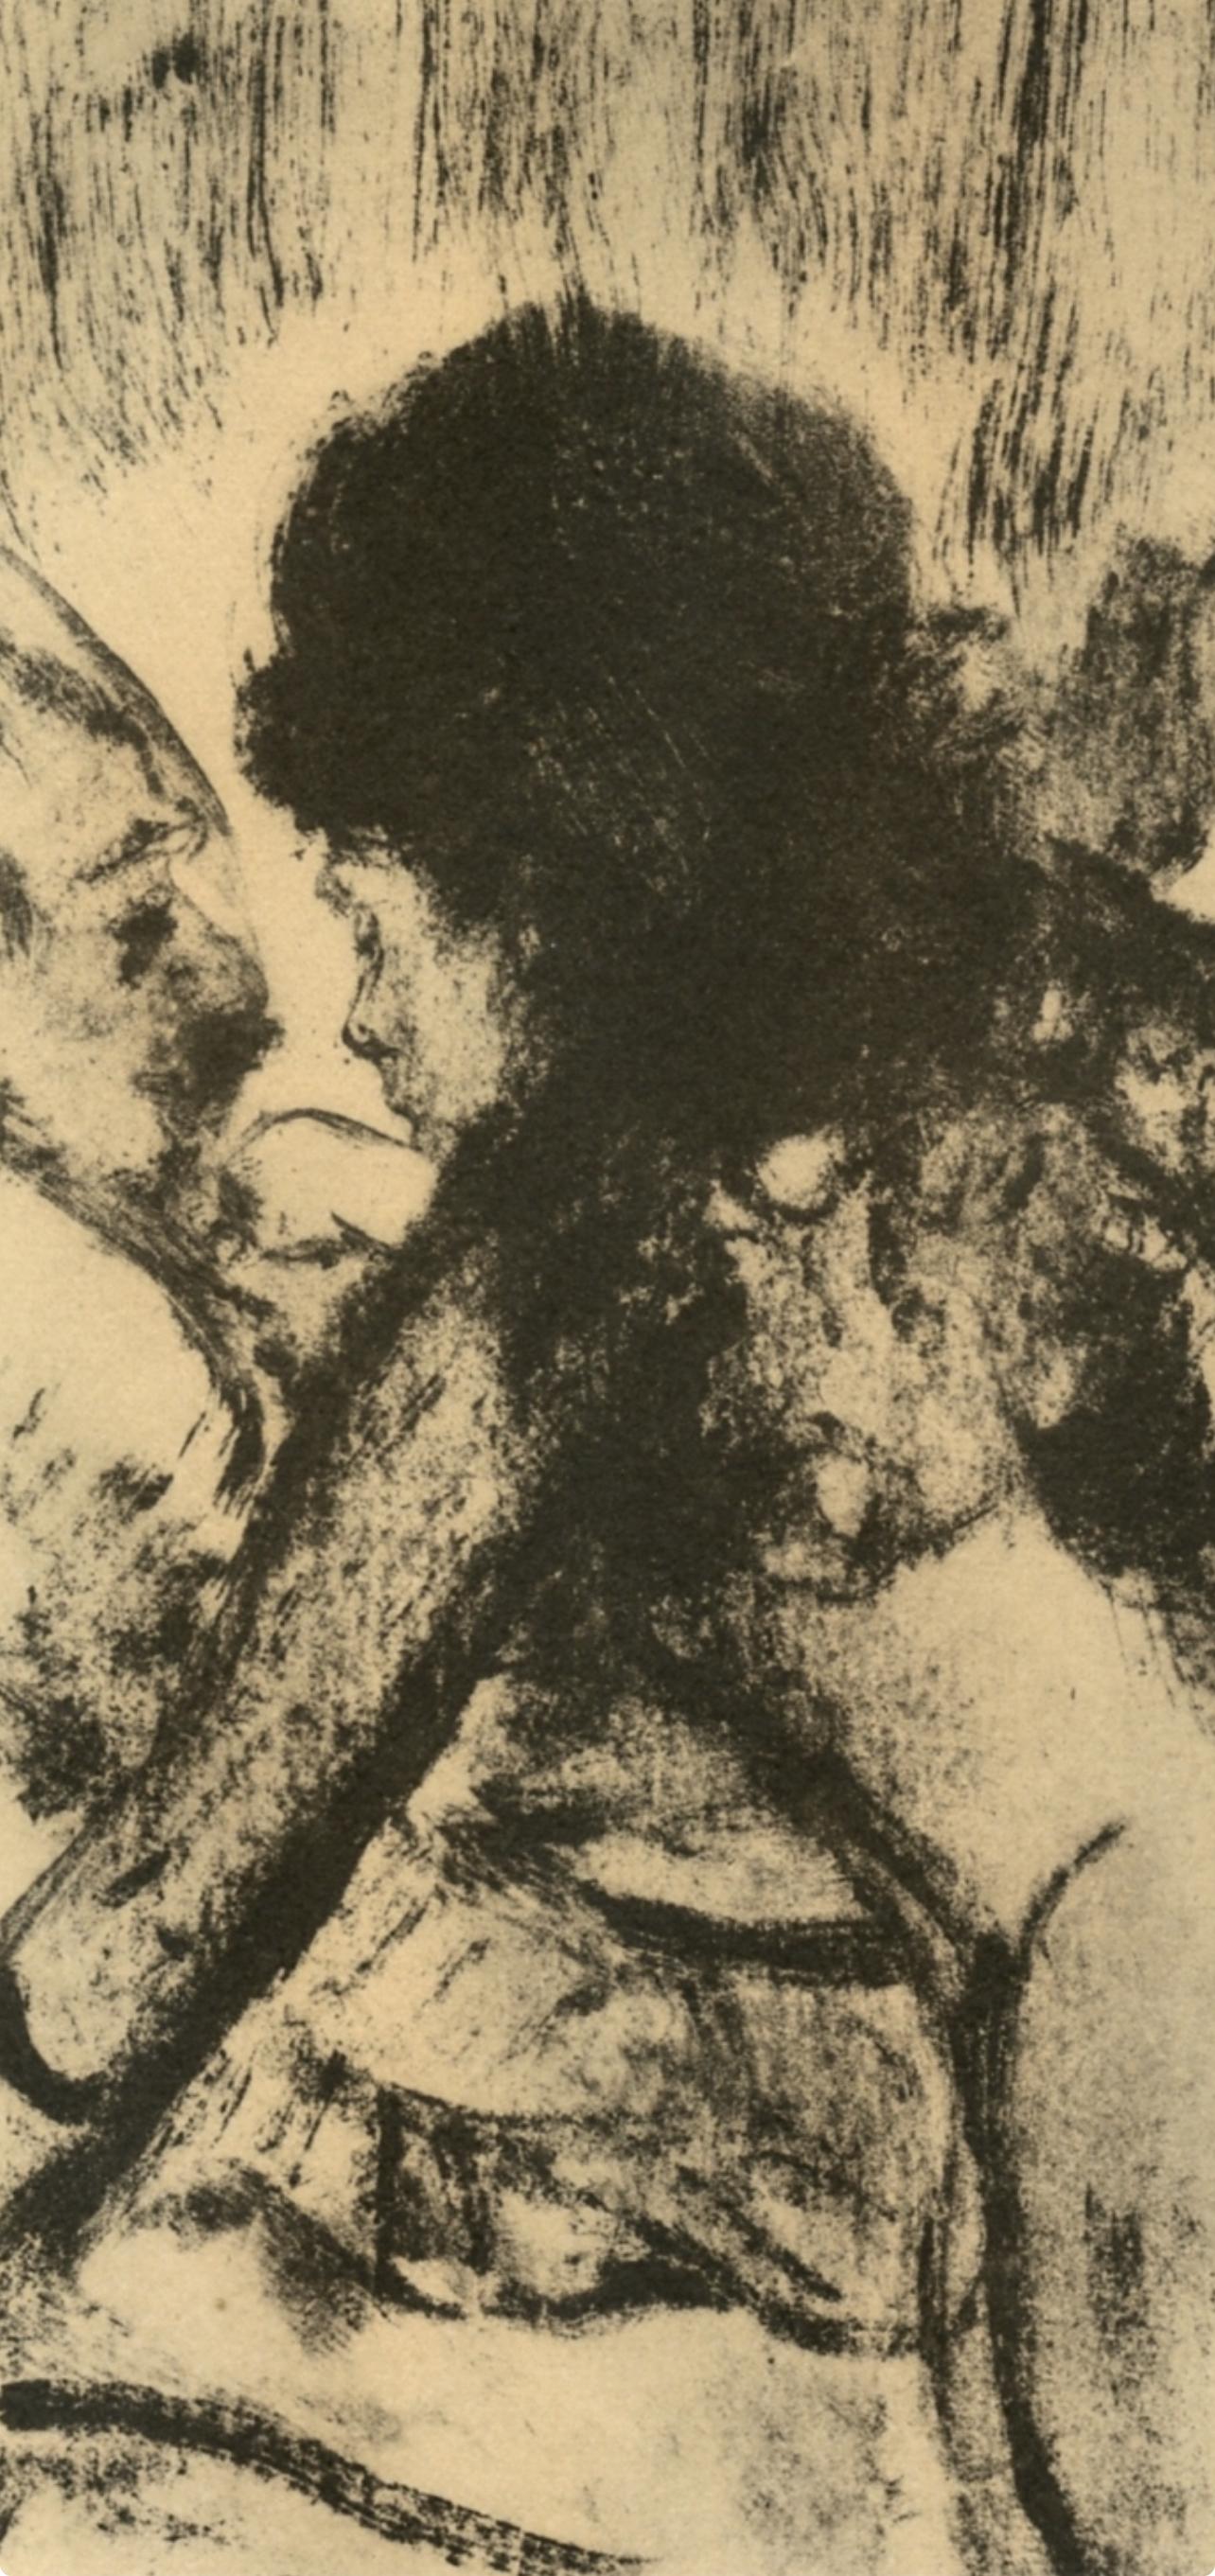 Degas, Conversation, Les Monotypes (after) - Print by Edgar Degas